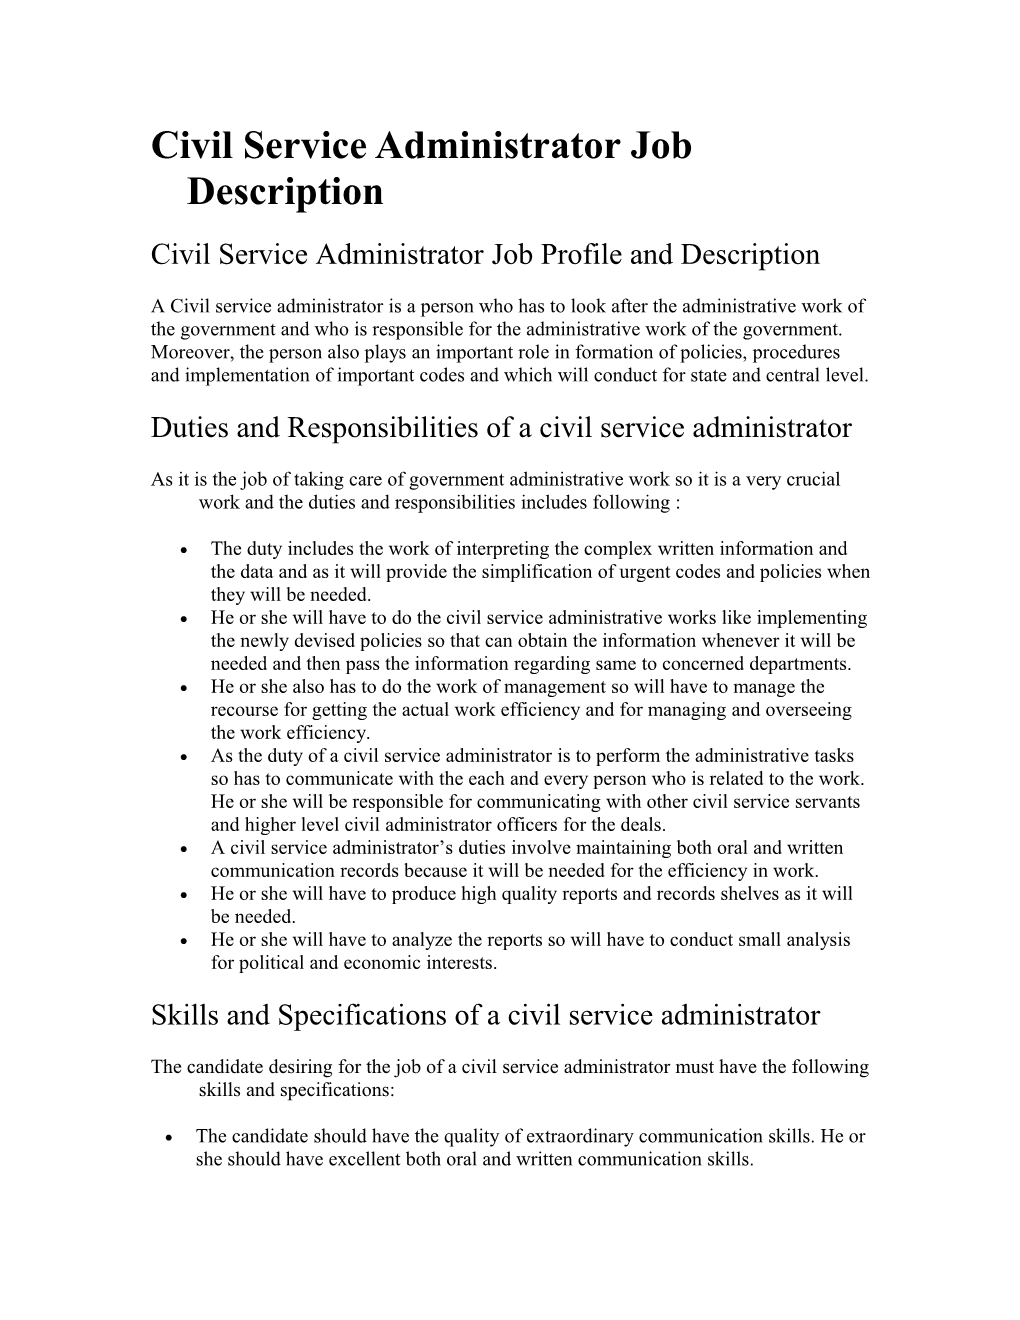 Civil Service Administrator Job Description